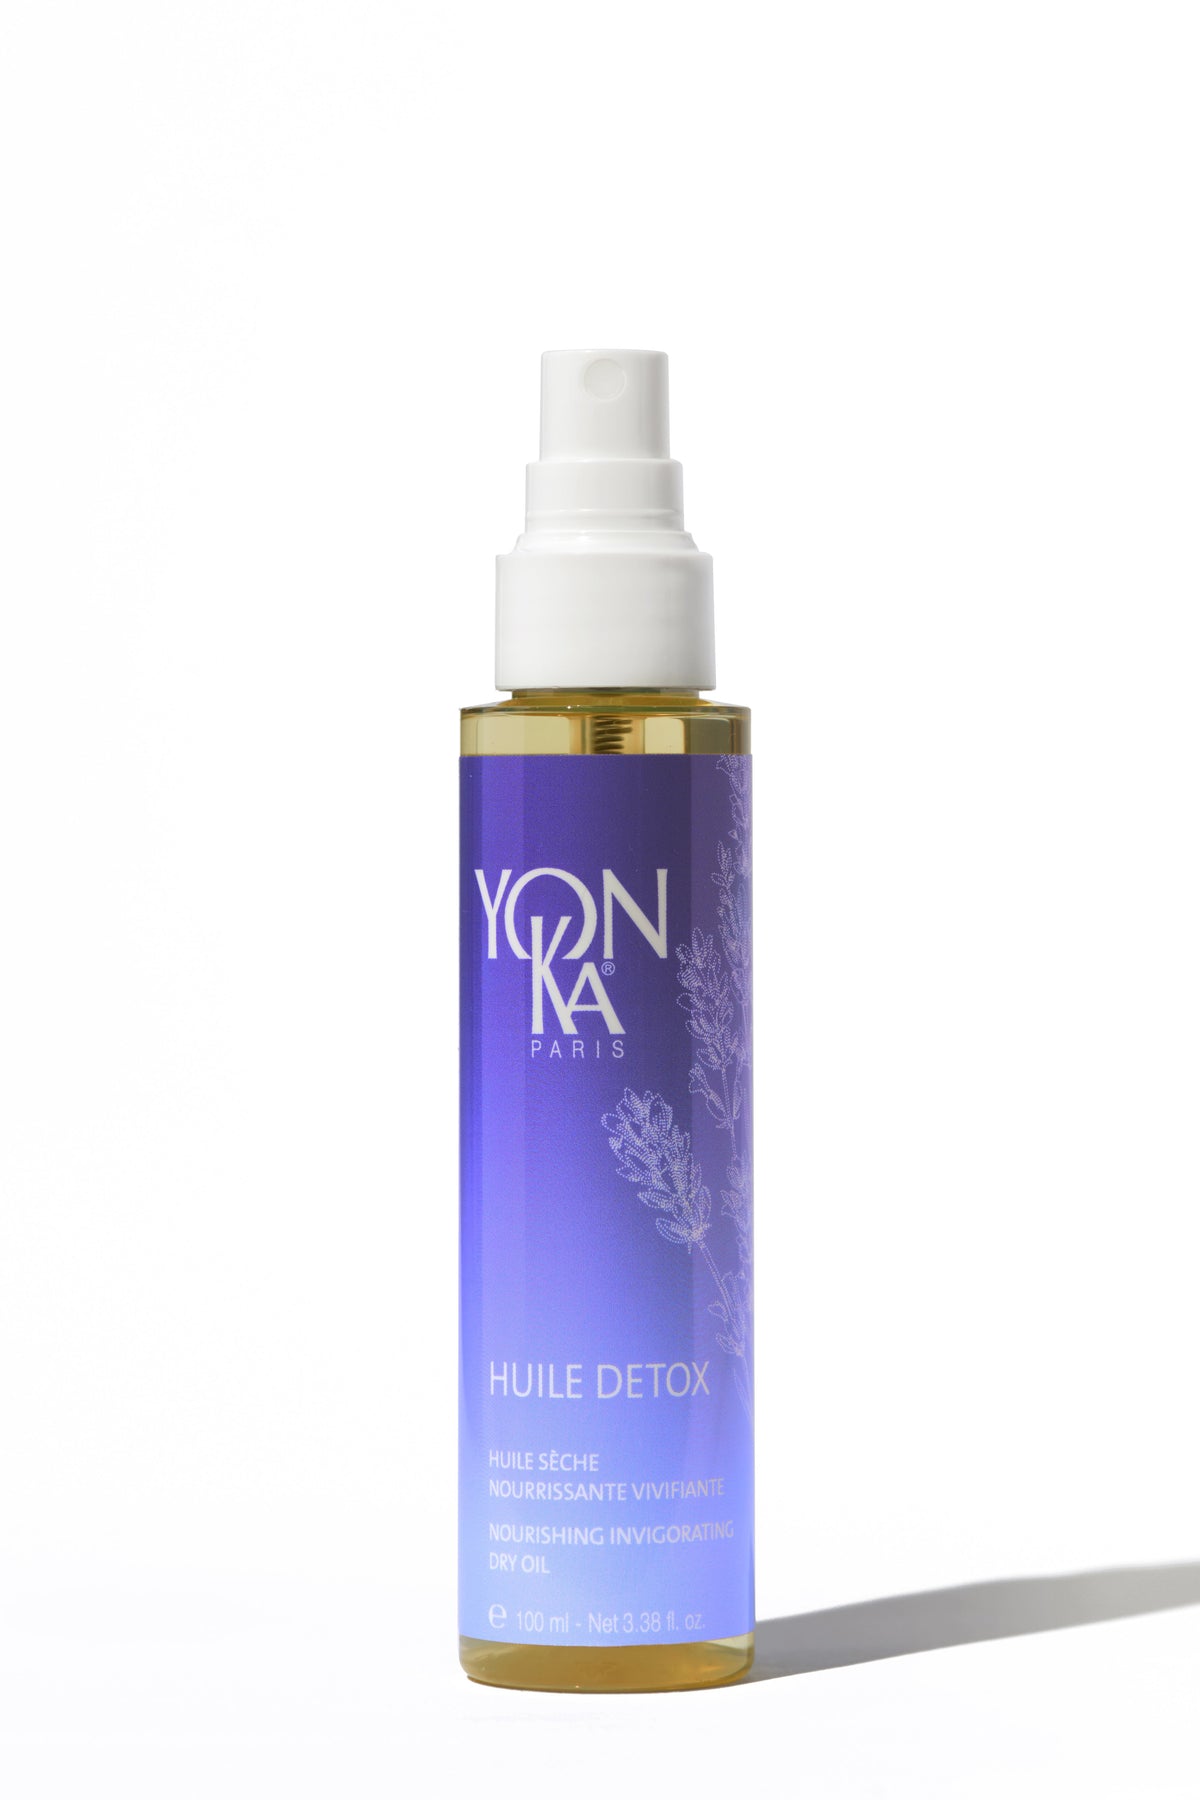 Yonka Body Detox Collection Gift Set (Save €19.45)